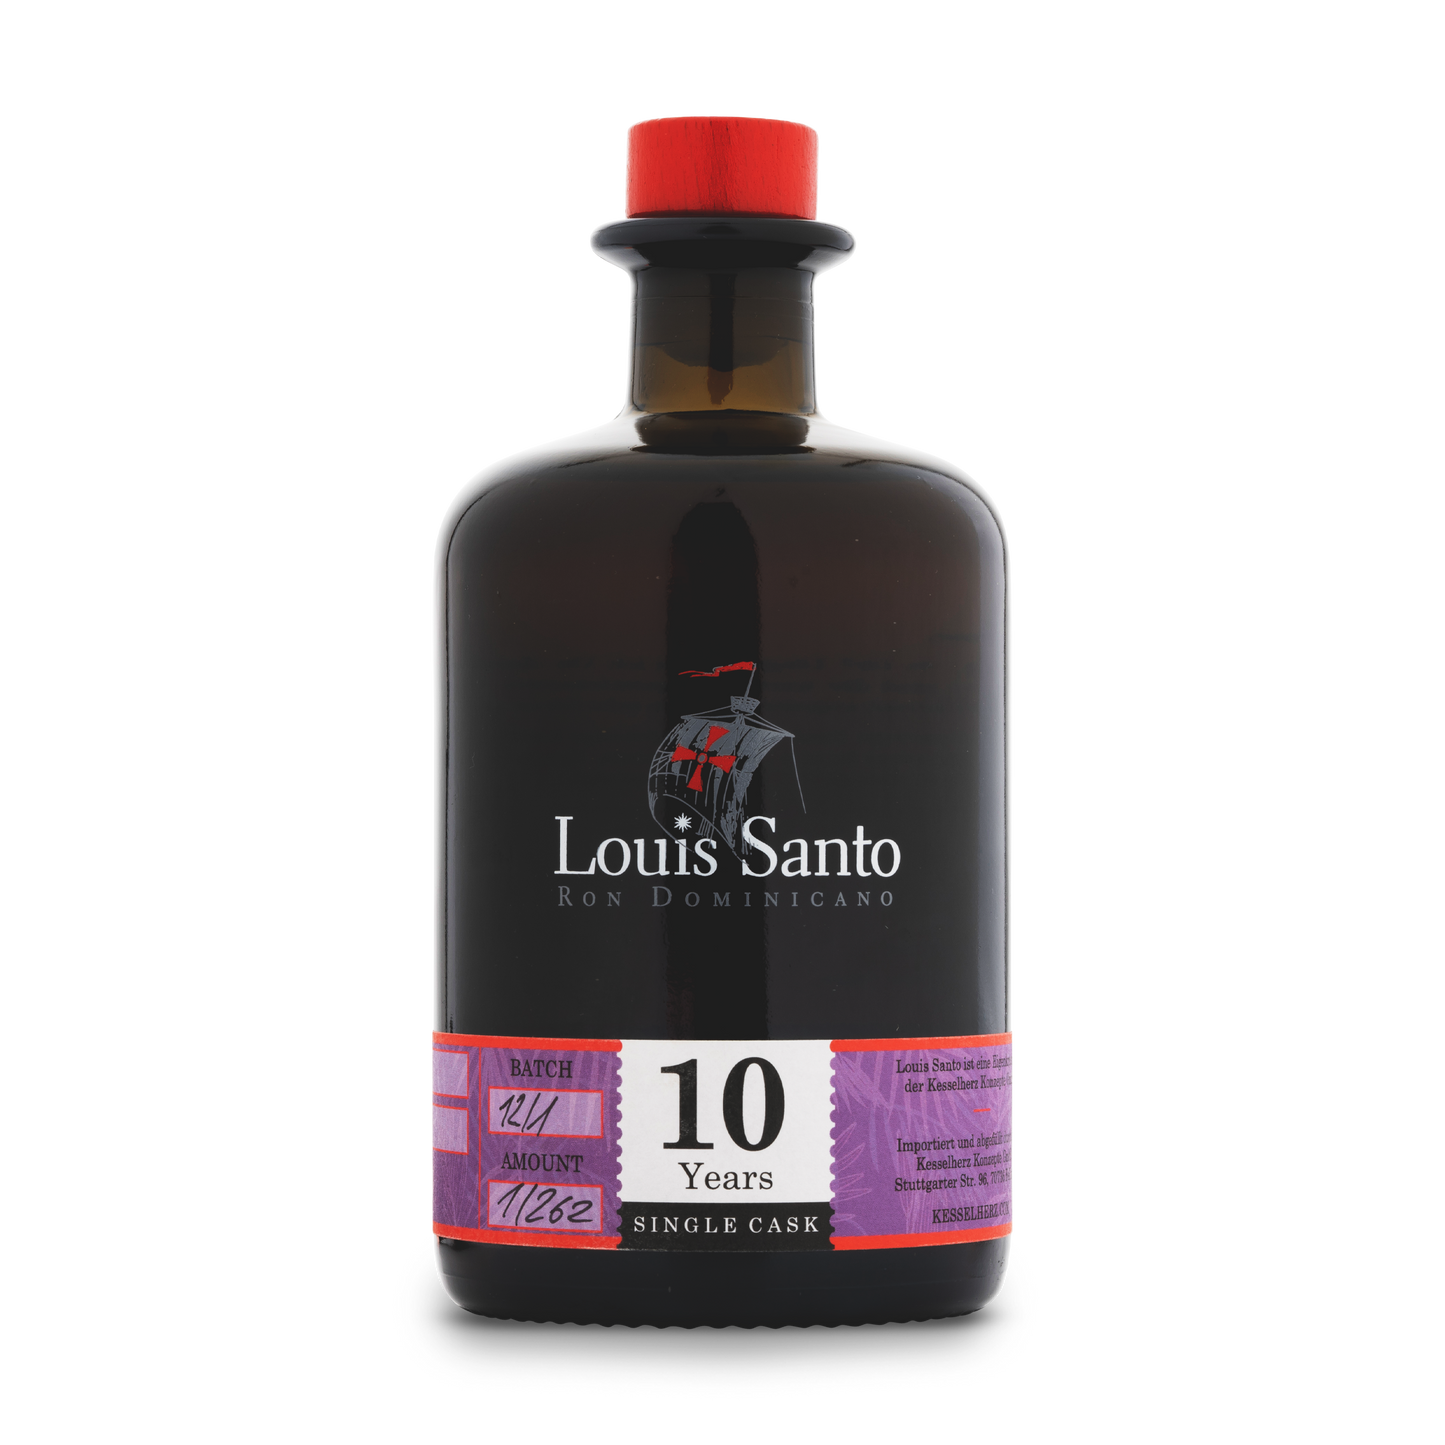 Louis Santo Single Cask Rum mit Creamsherry Finish Cask Strength stark limitierte Einzelfassabfüllung